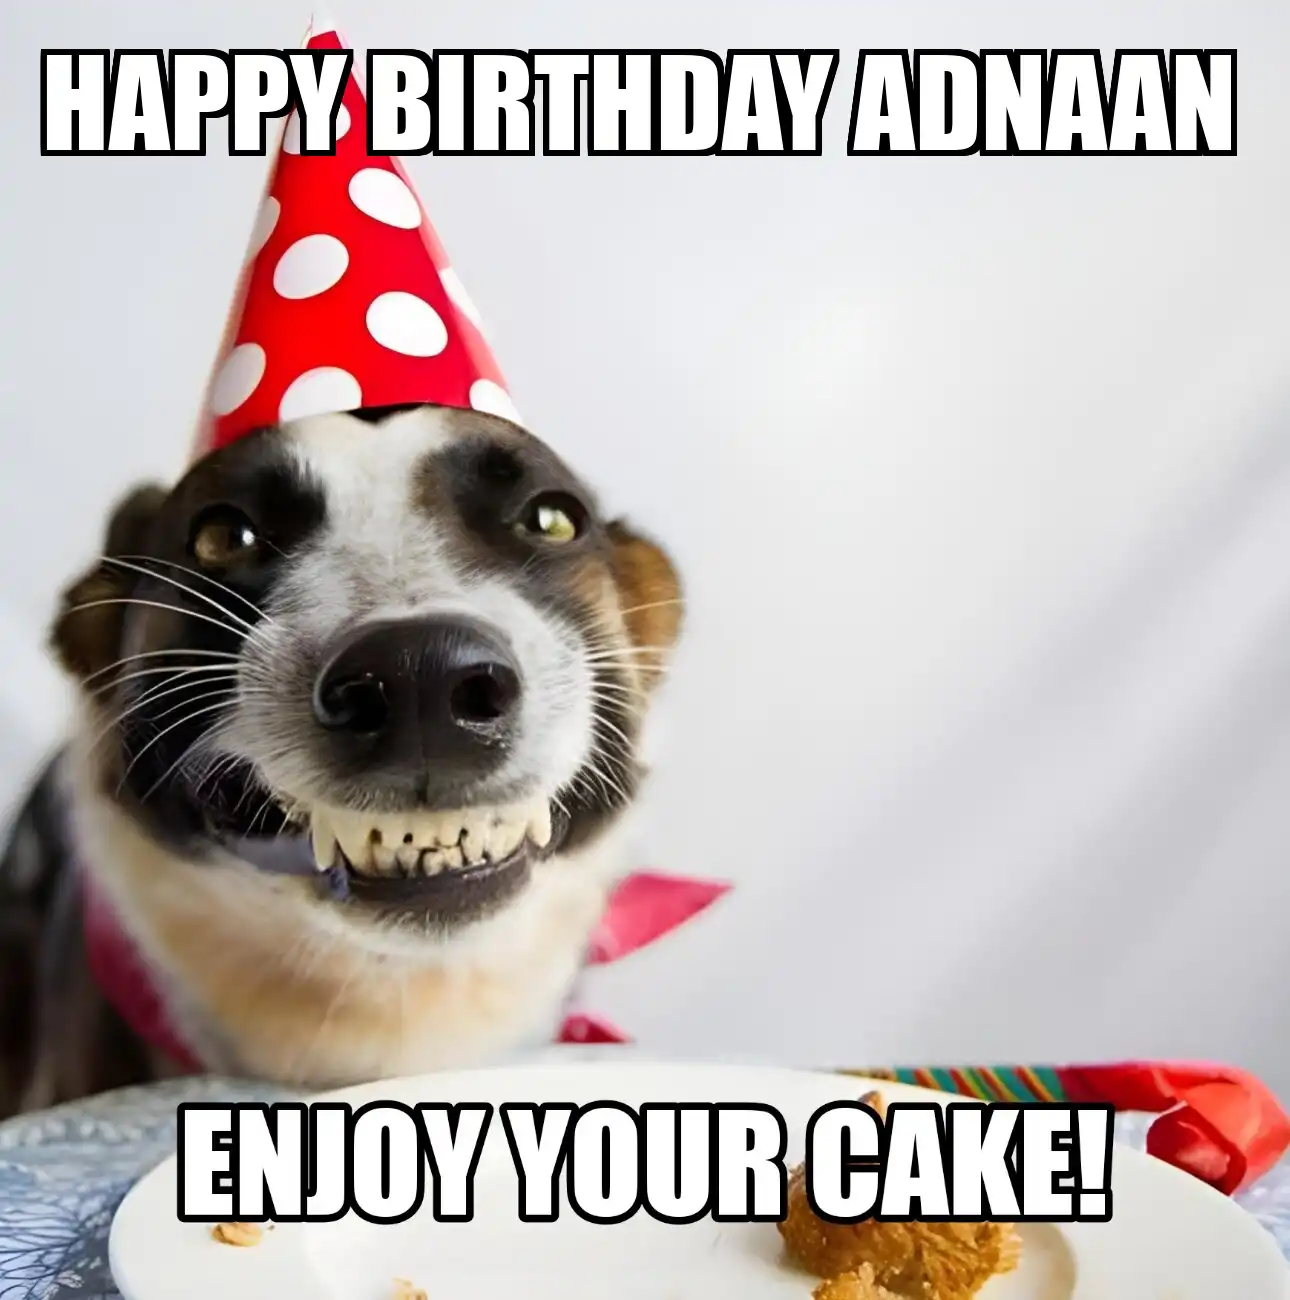 Happy Birthday Adnaan Enjoy Your Cake Dog Meme